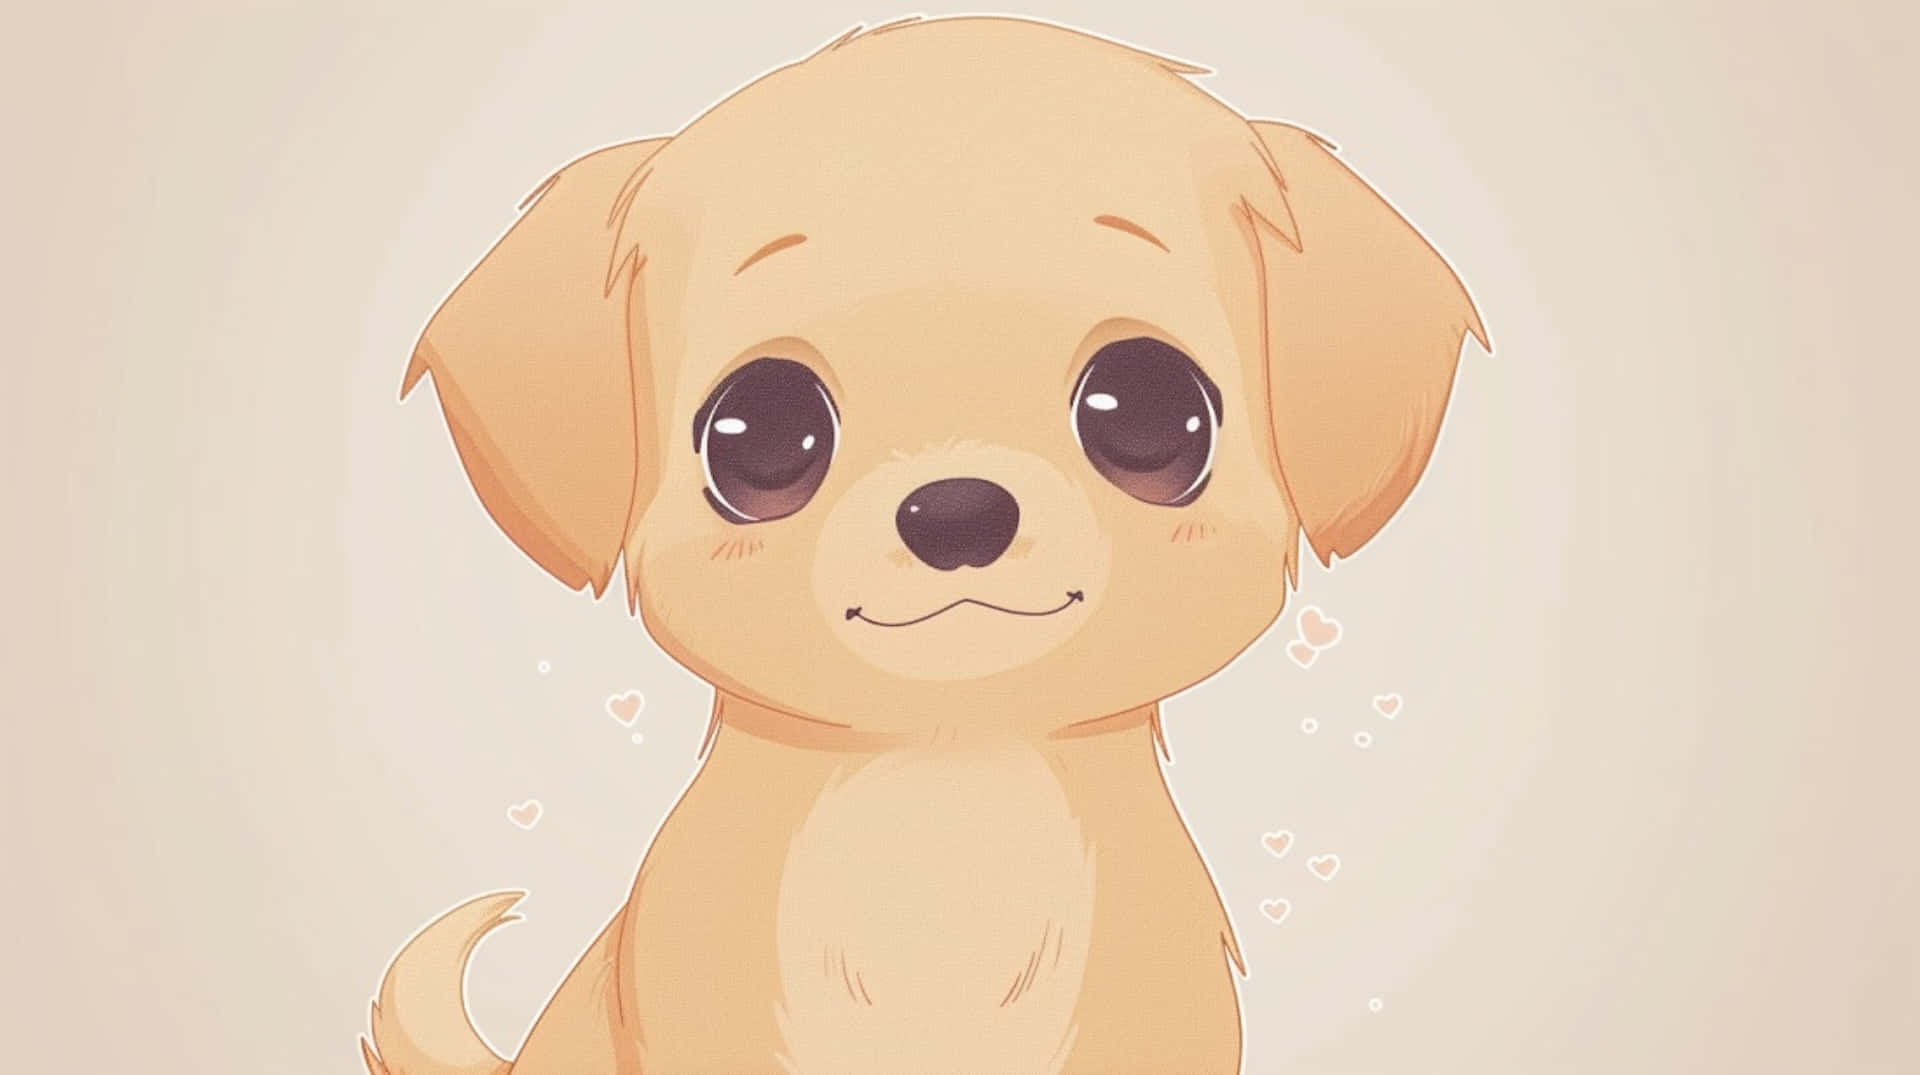 Adorable Anime Puppy Illustration.jpg Wallpaper